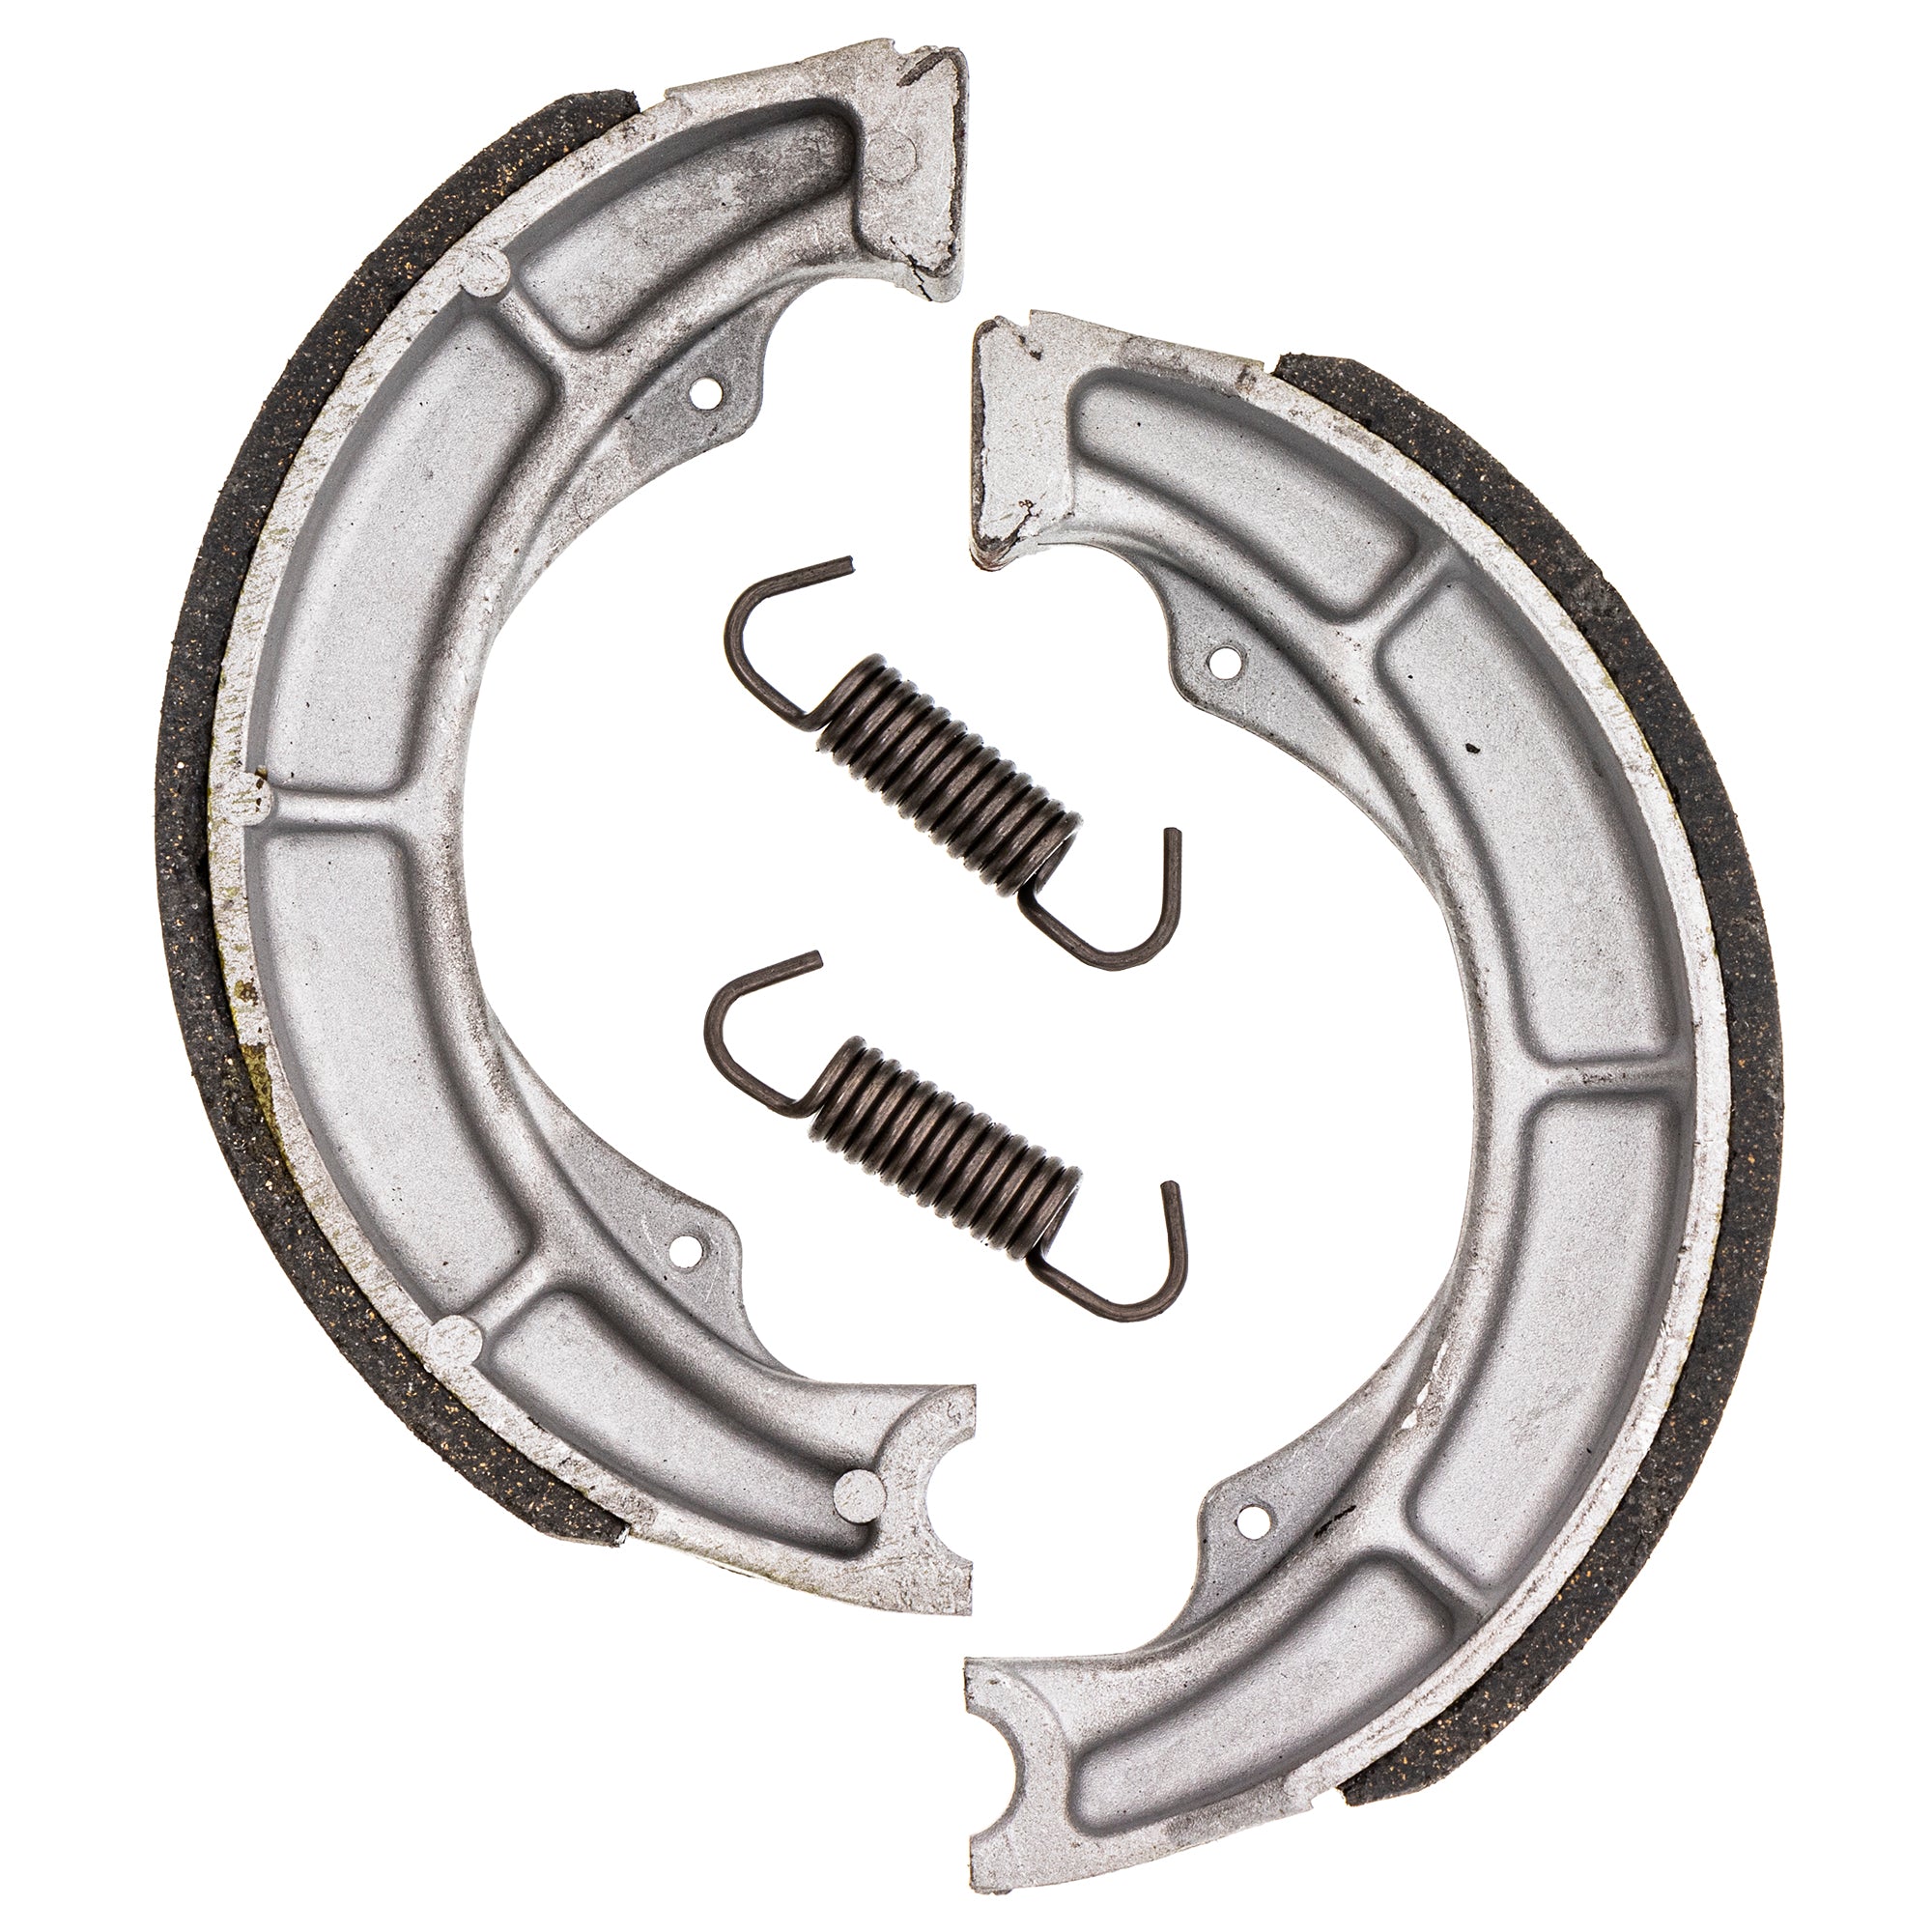 Full Semi-Metallic brake Pad & Shoe Set For Suzuki MK1002799